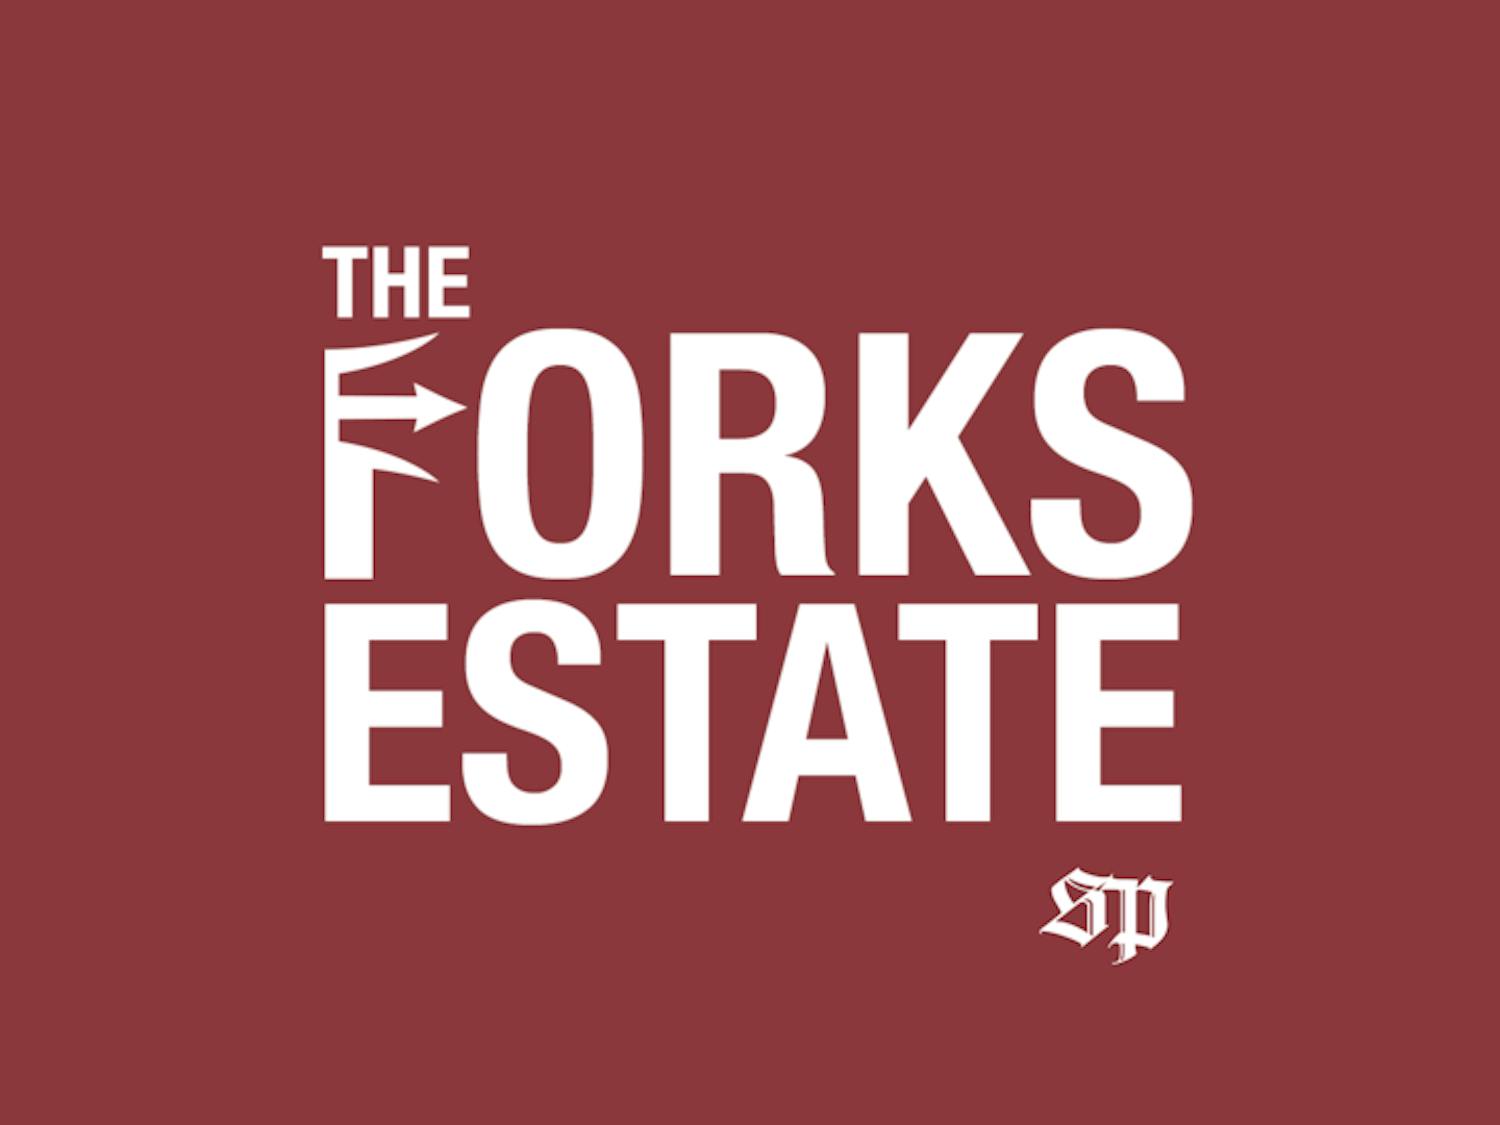 Graphic designed for The Forks Estate podcast.&nbsp;